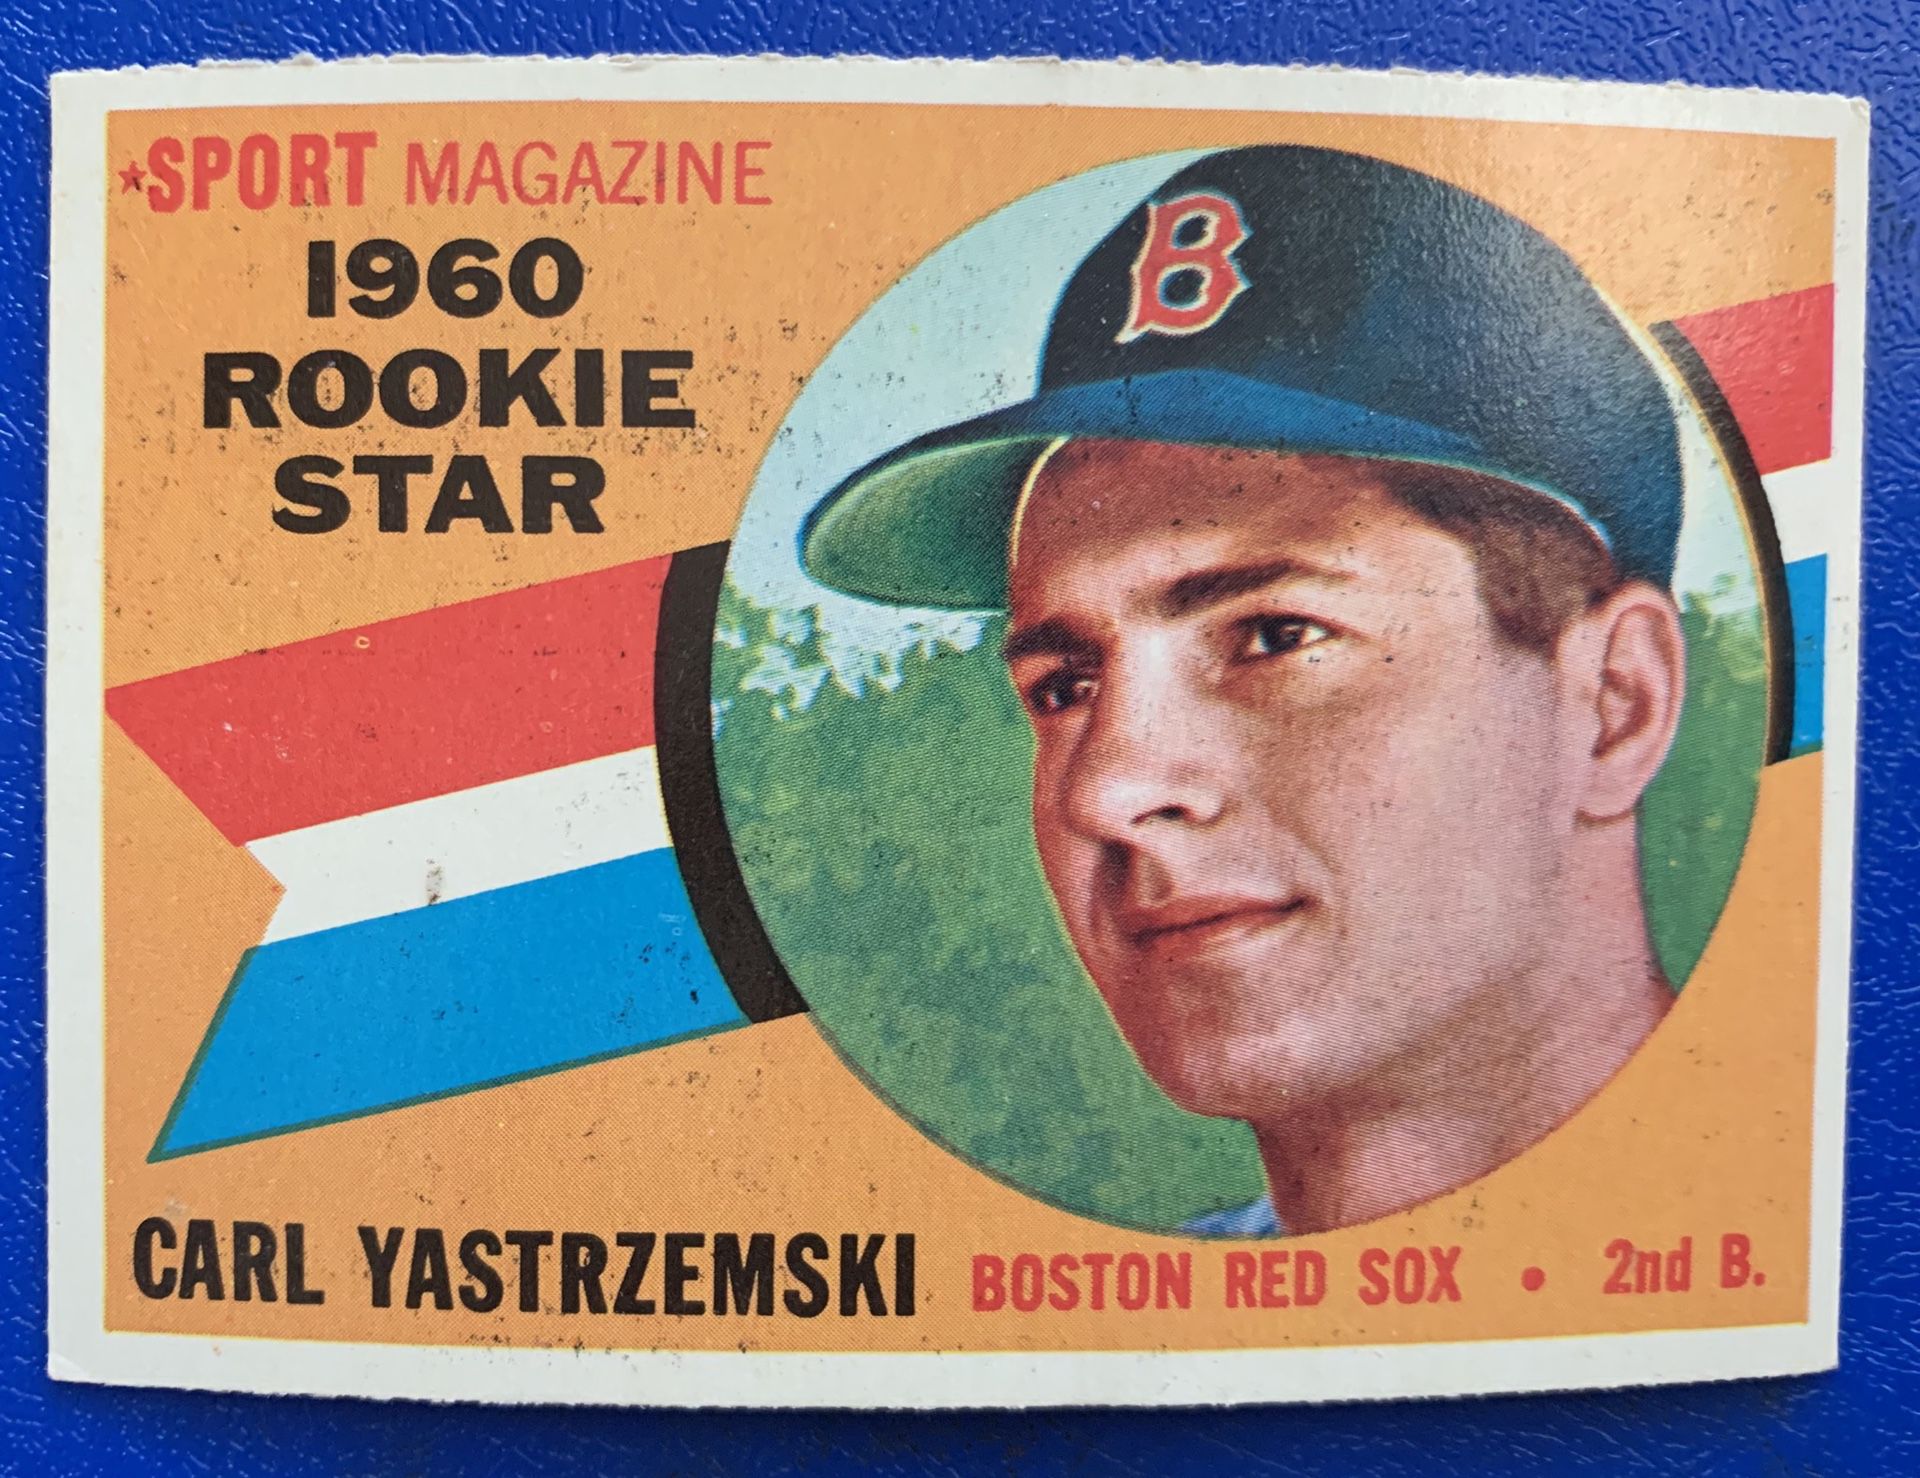 1960 Carl Yastrzemski Rookie Topps Baseball Card # 148 Original Boston Red Sox. Nice